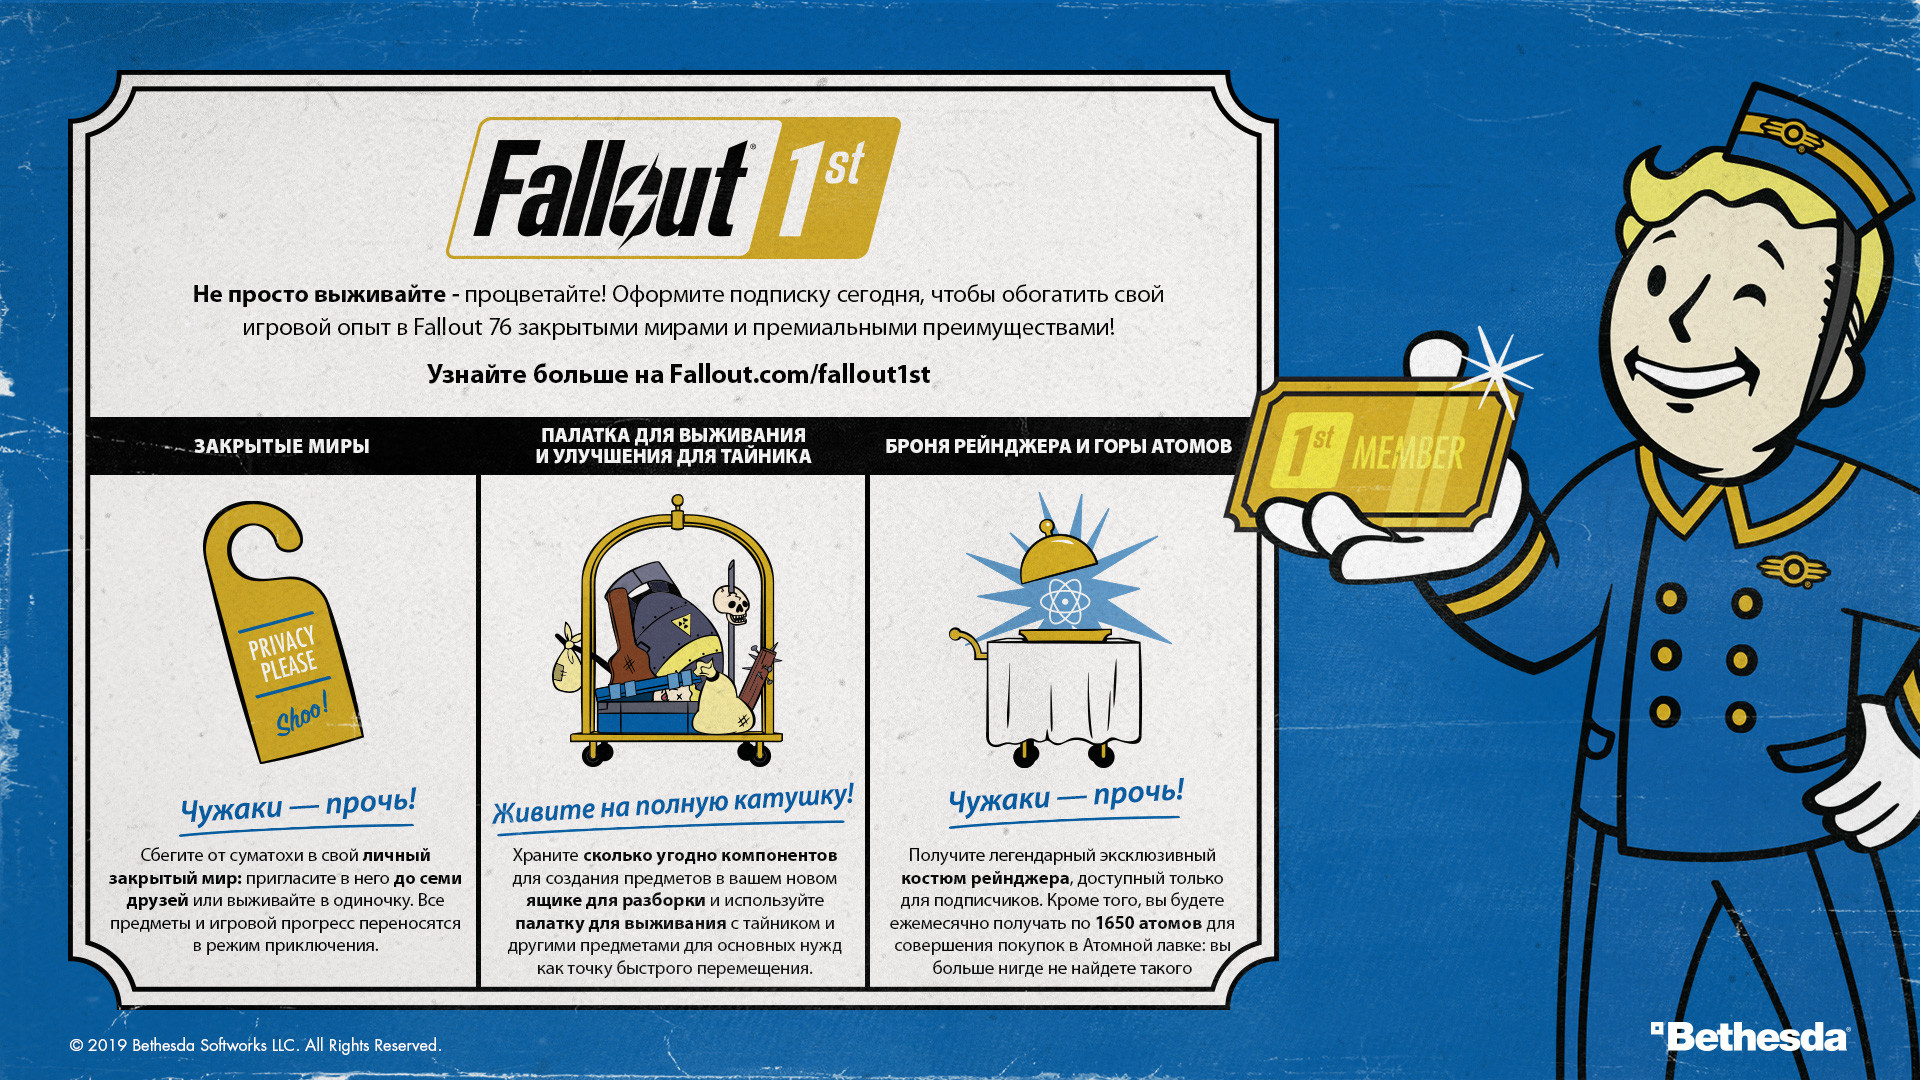 Fallout 76 - Fallout 1st - PlayStation